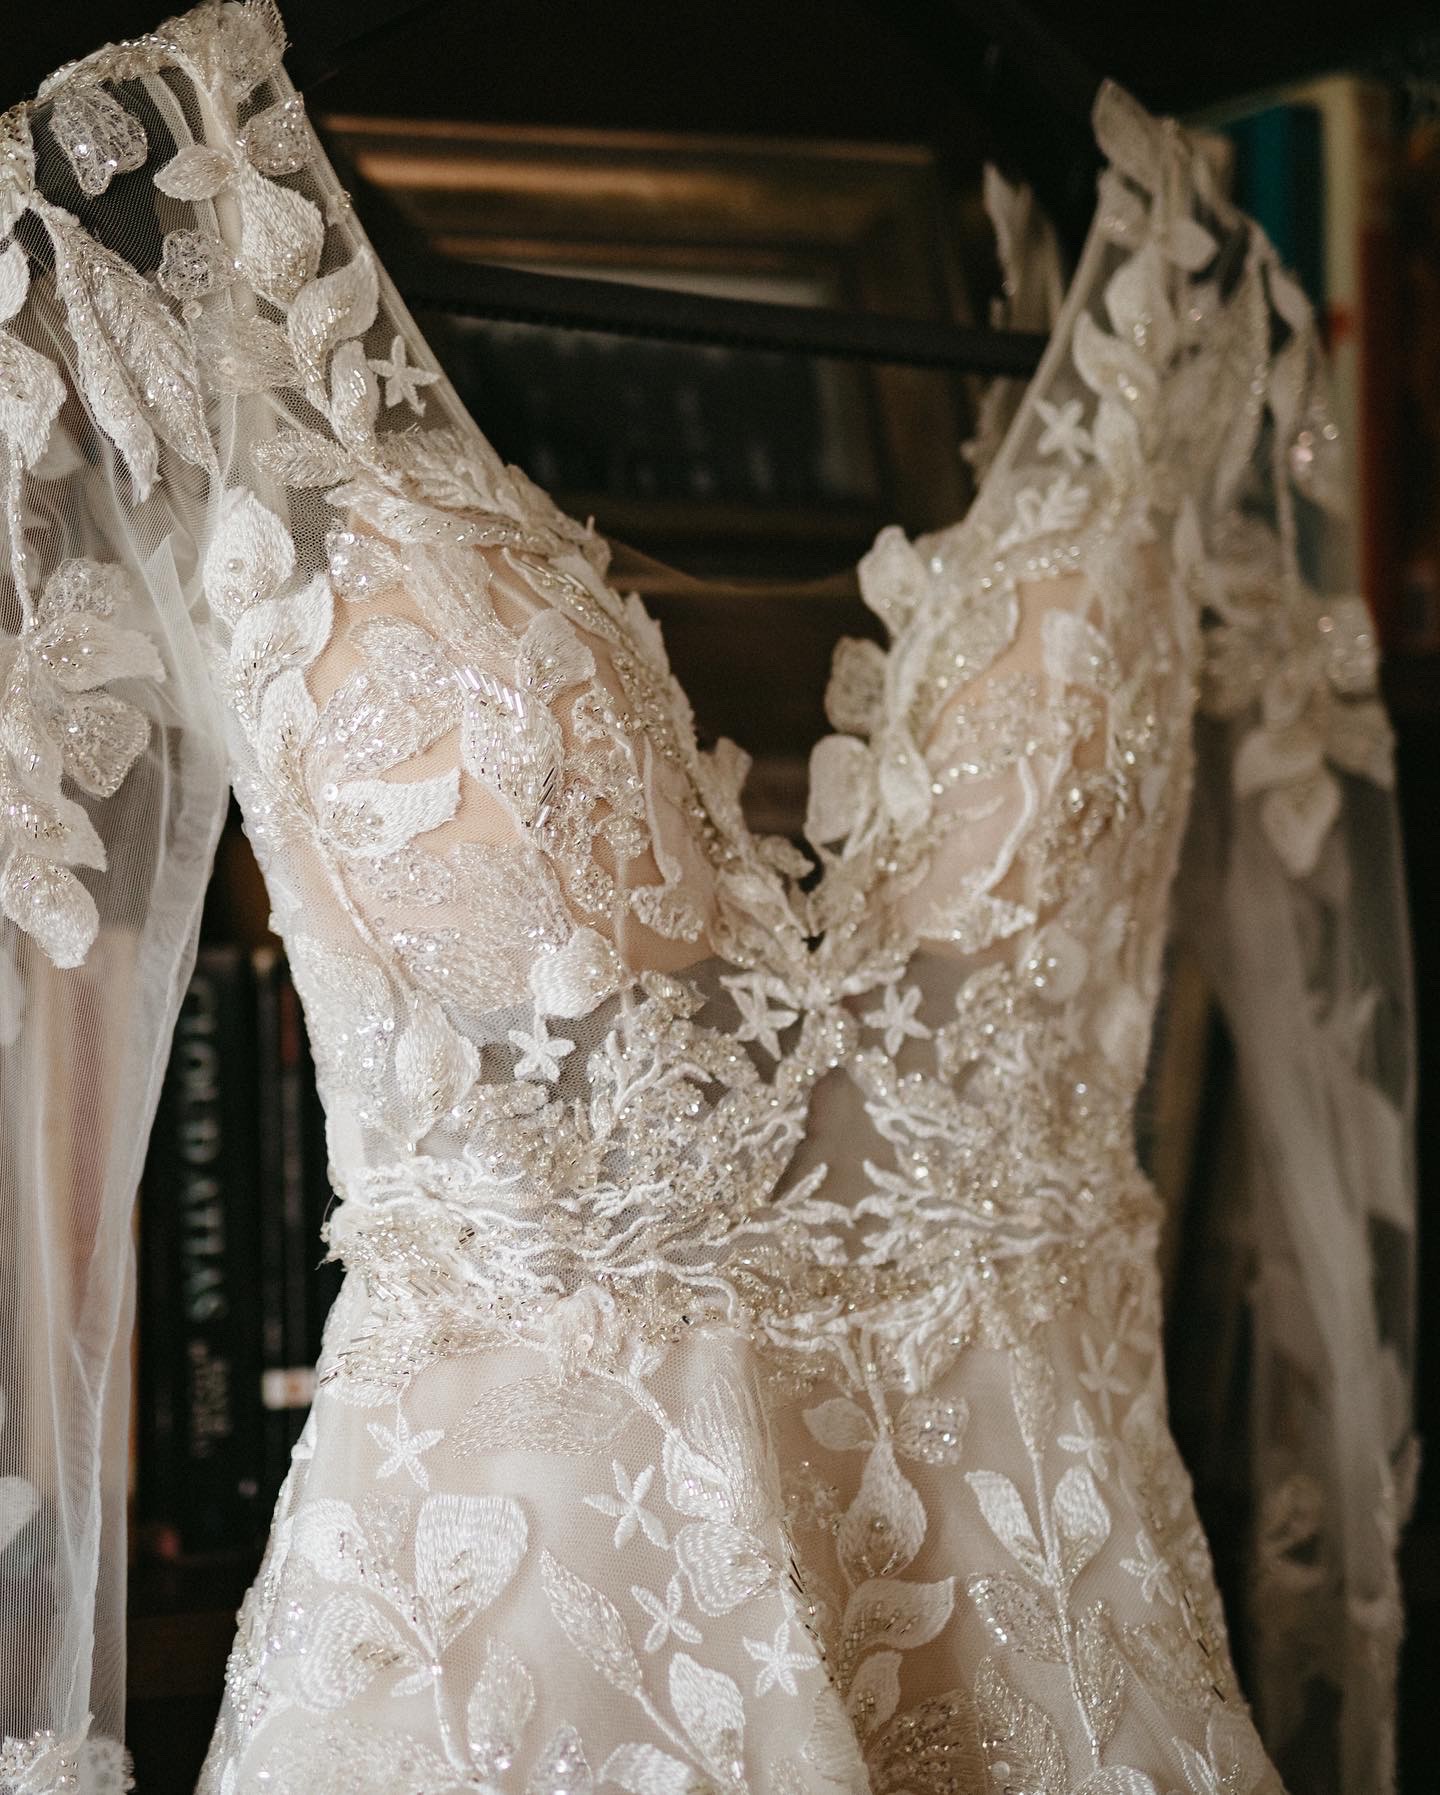 — Fourteenth: The Vintage Wedding Veil